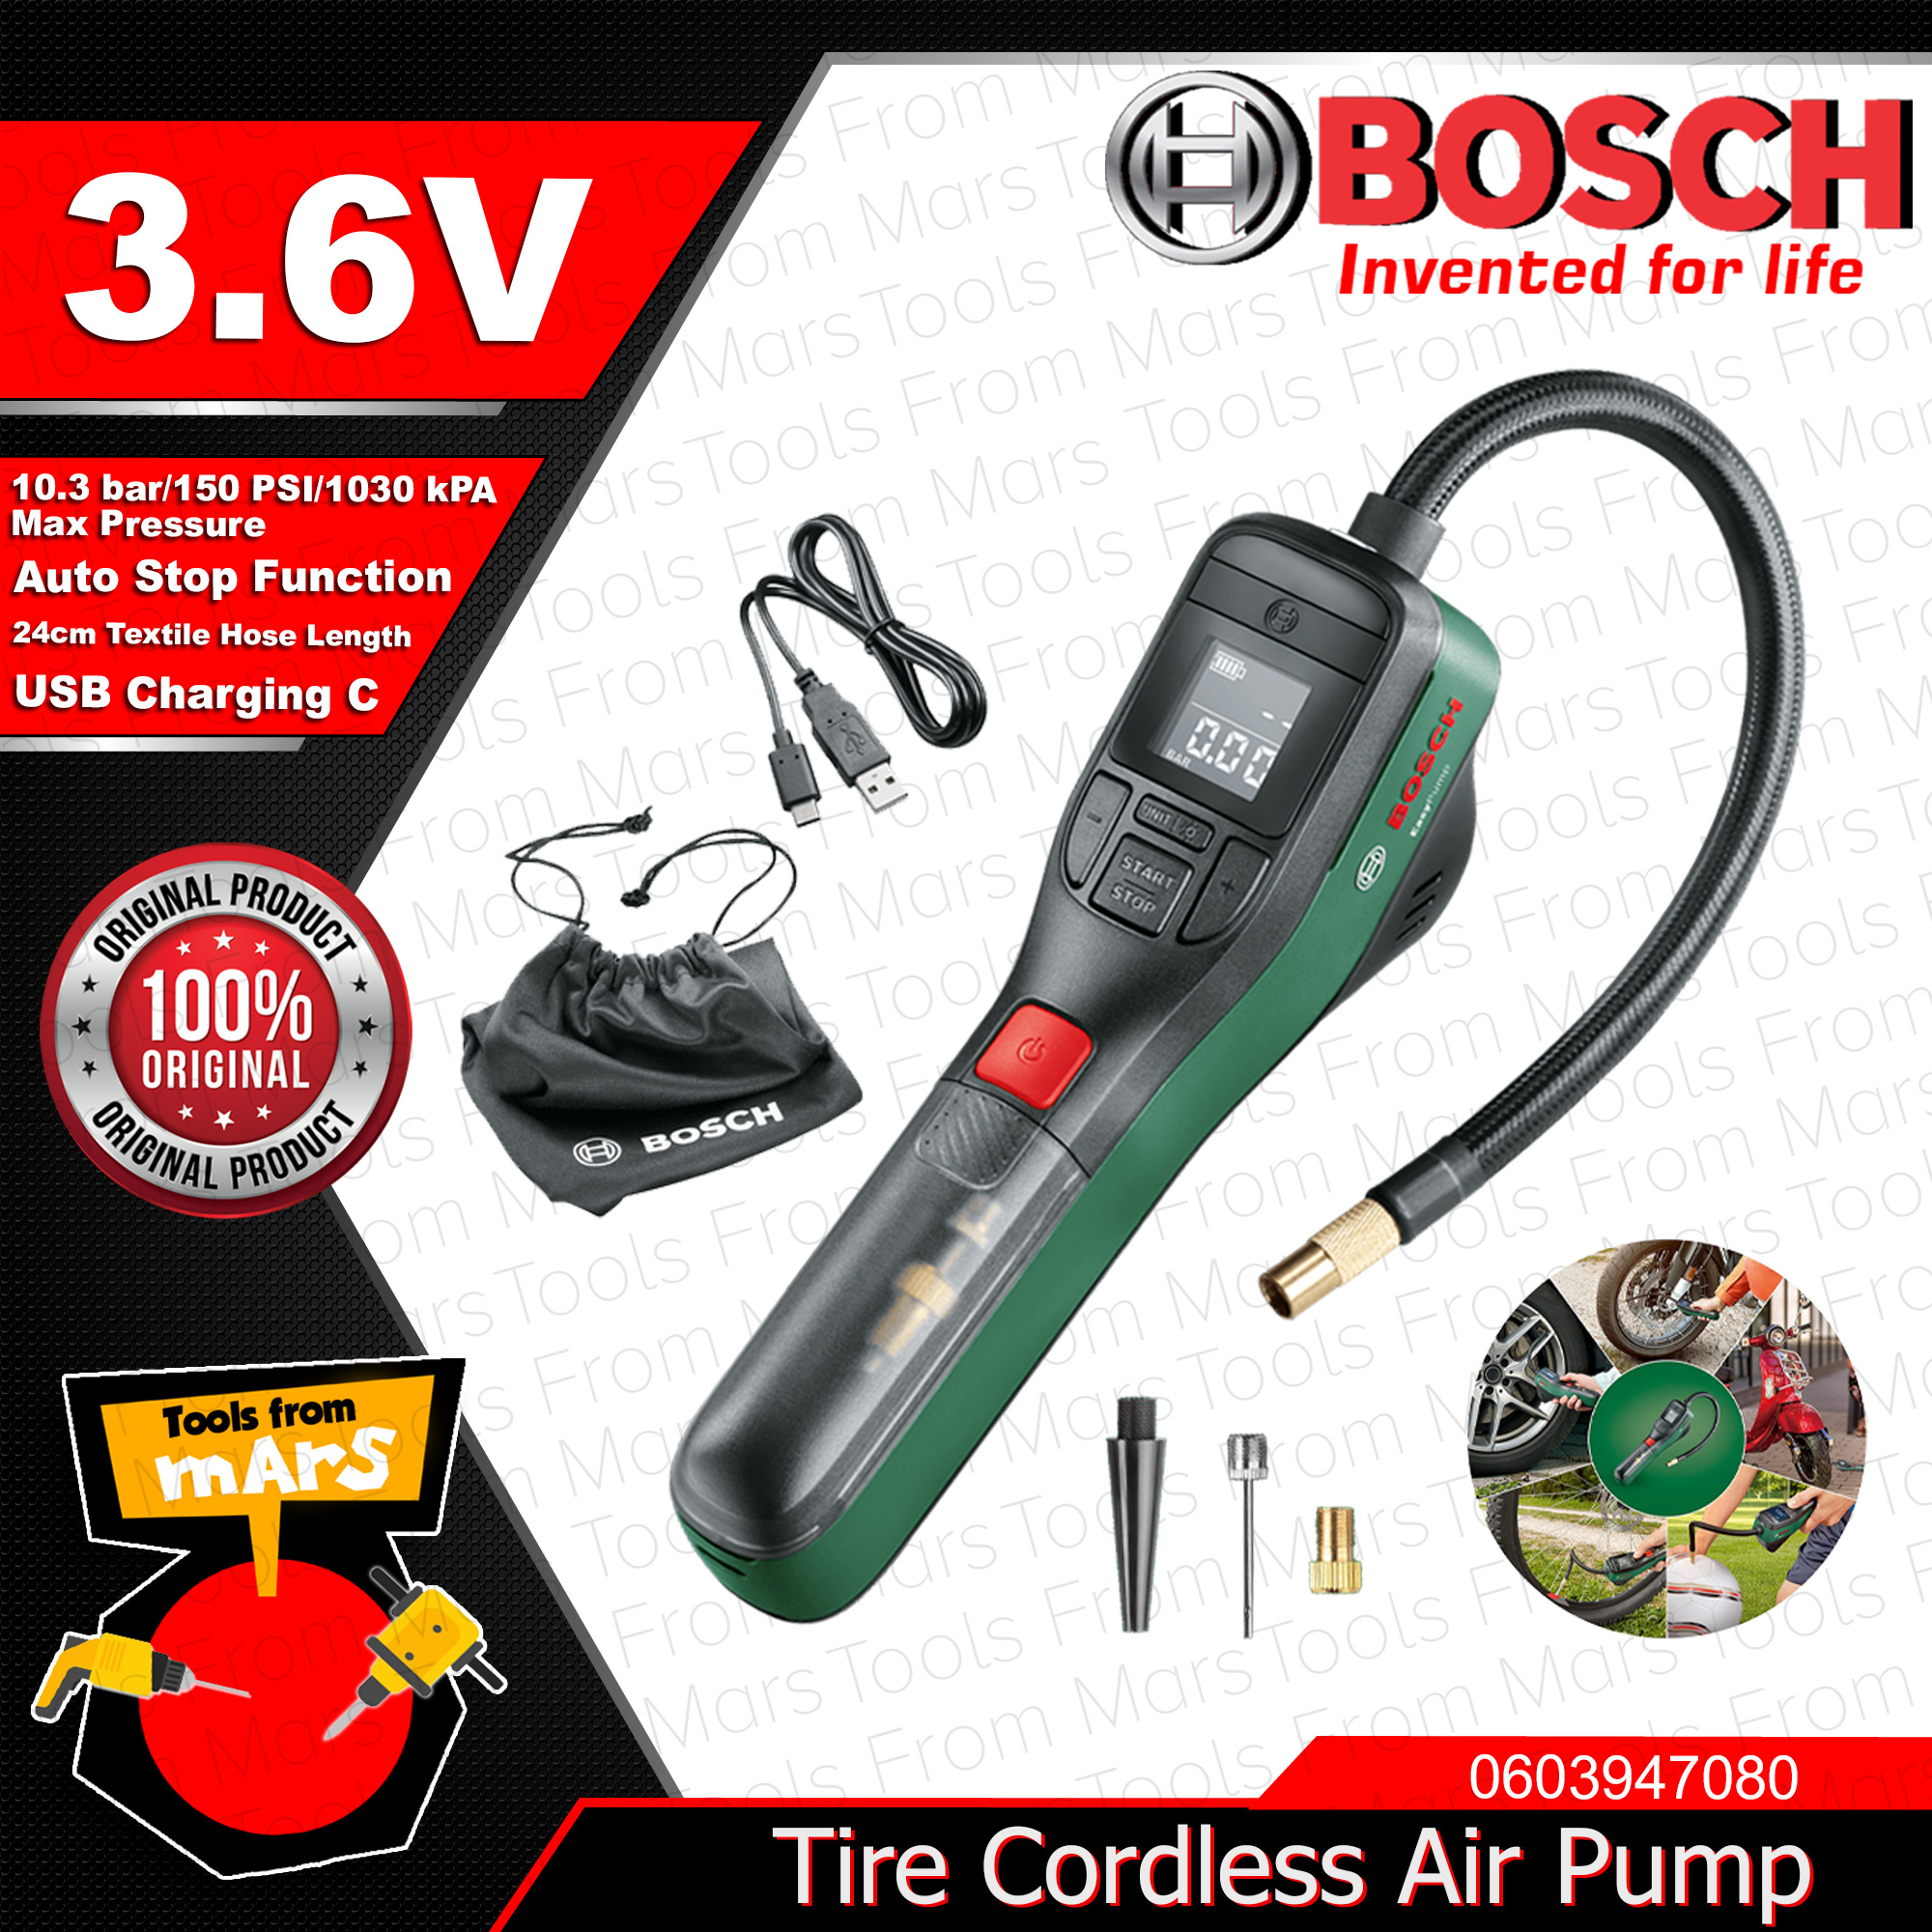 BOSCH Cordless Bike Compressed Air Pump 3.6V 3.0Ah 150PSI